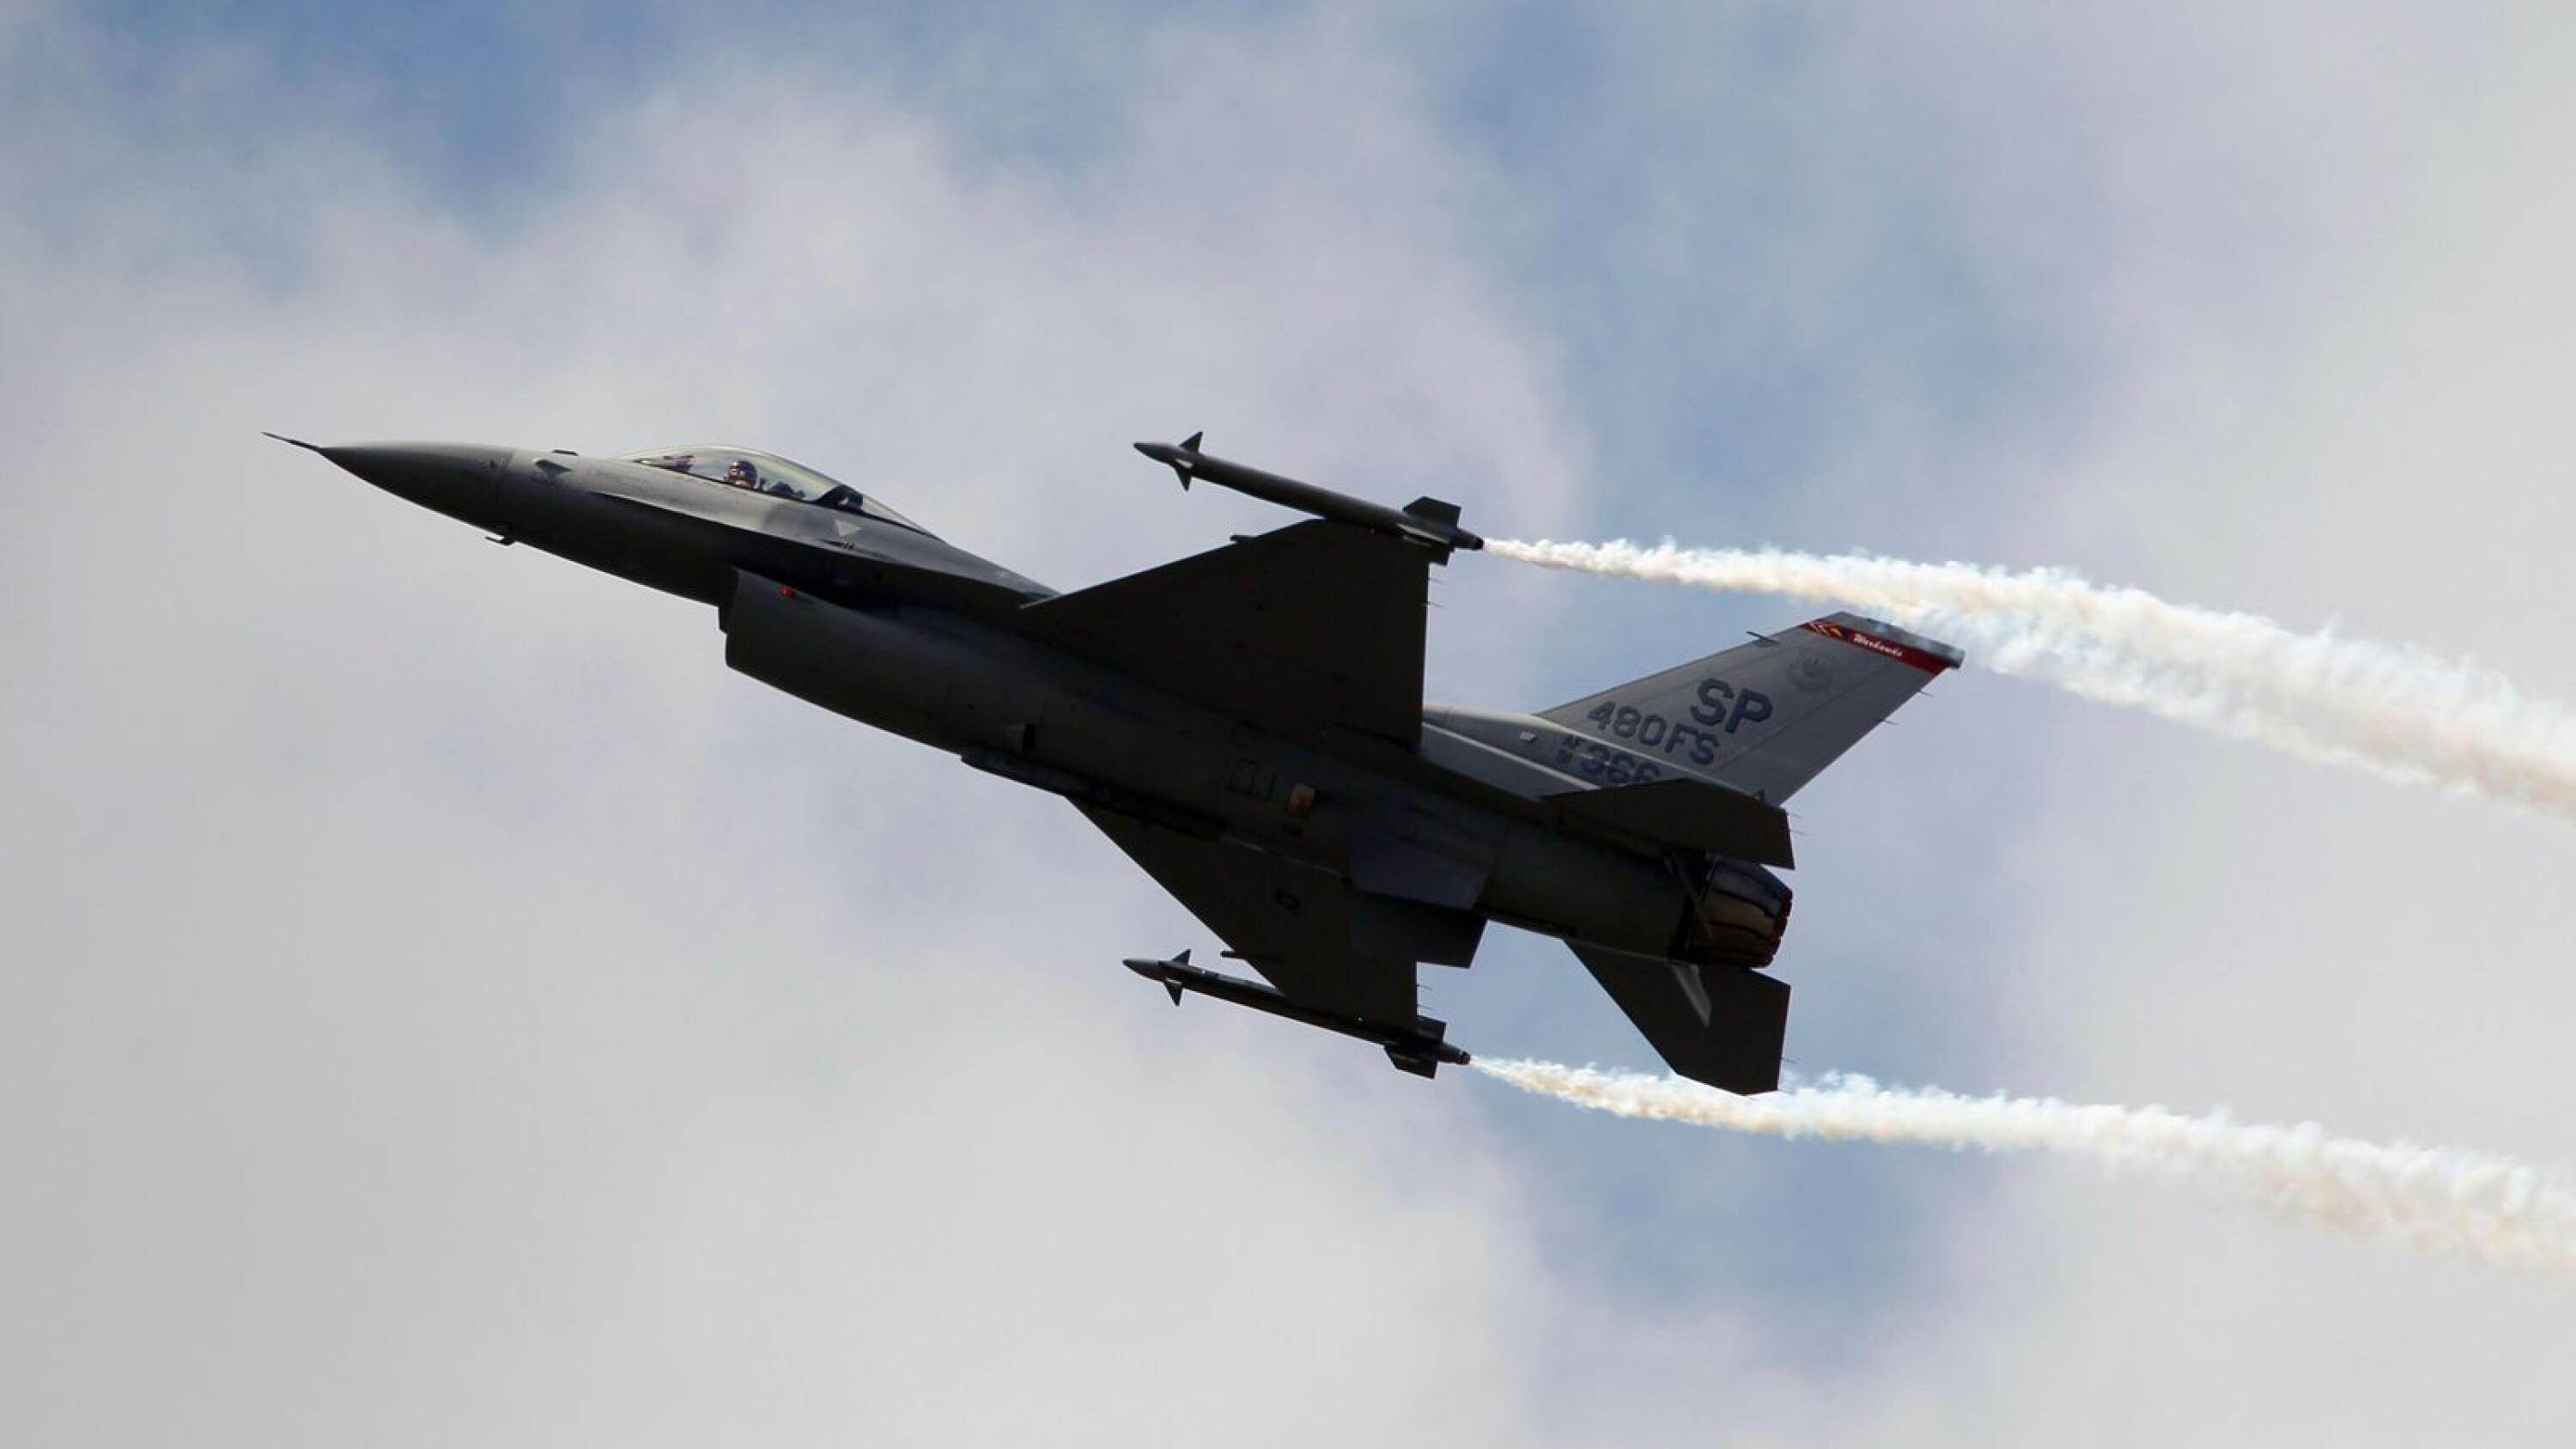 F-16 flier sent to intercept plane saw pilot slumped over before crash